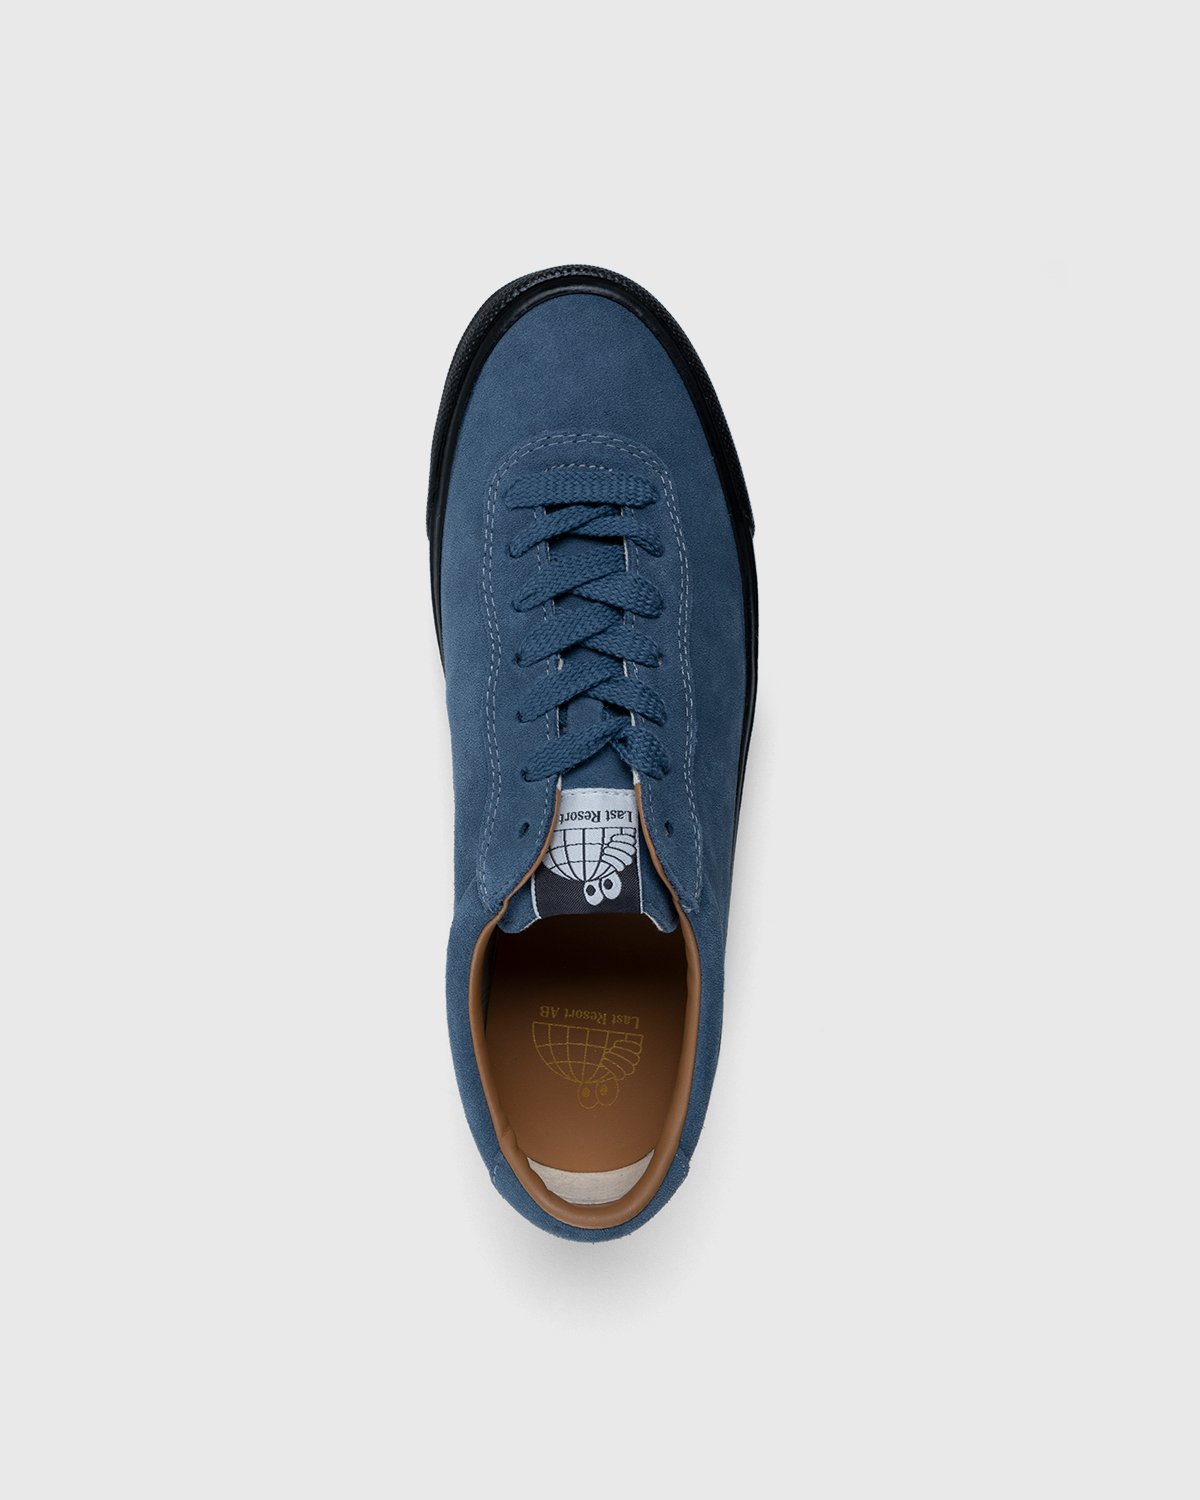 Last Resort AB - VM001 Suede Lo Blue/Black - Footwear - Blue - Image 6